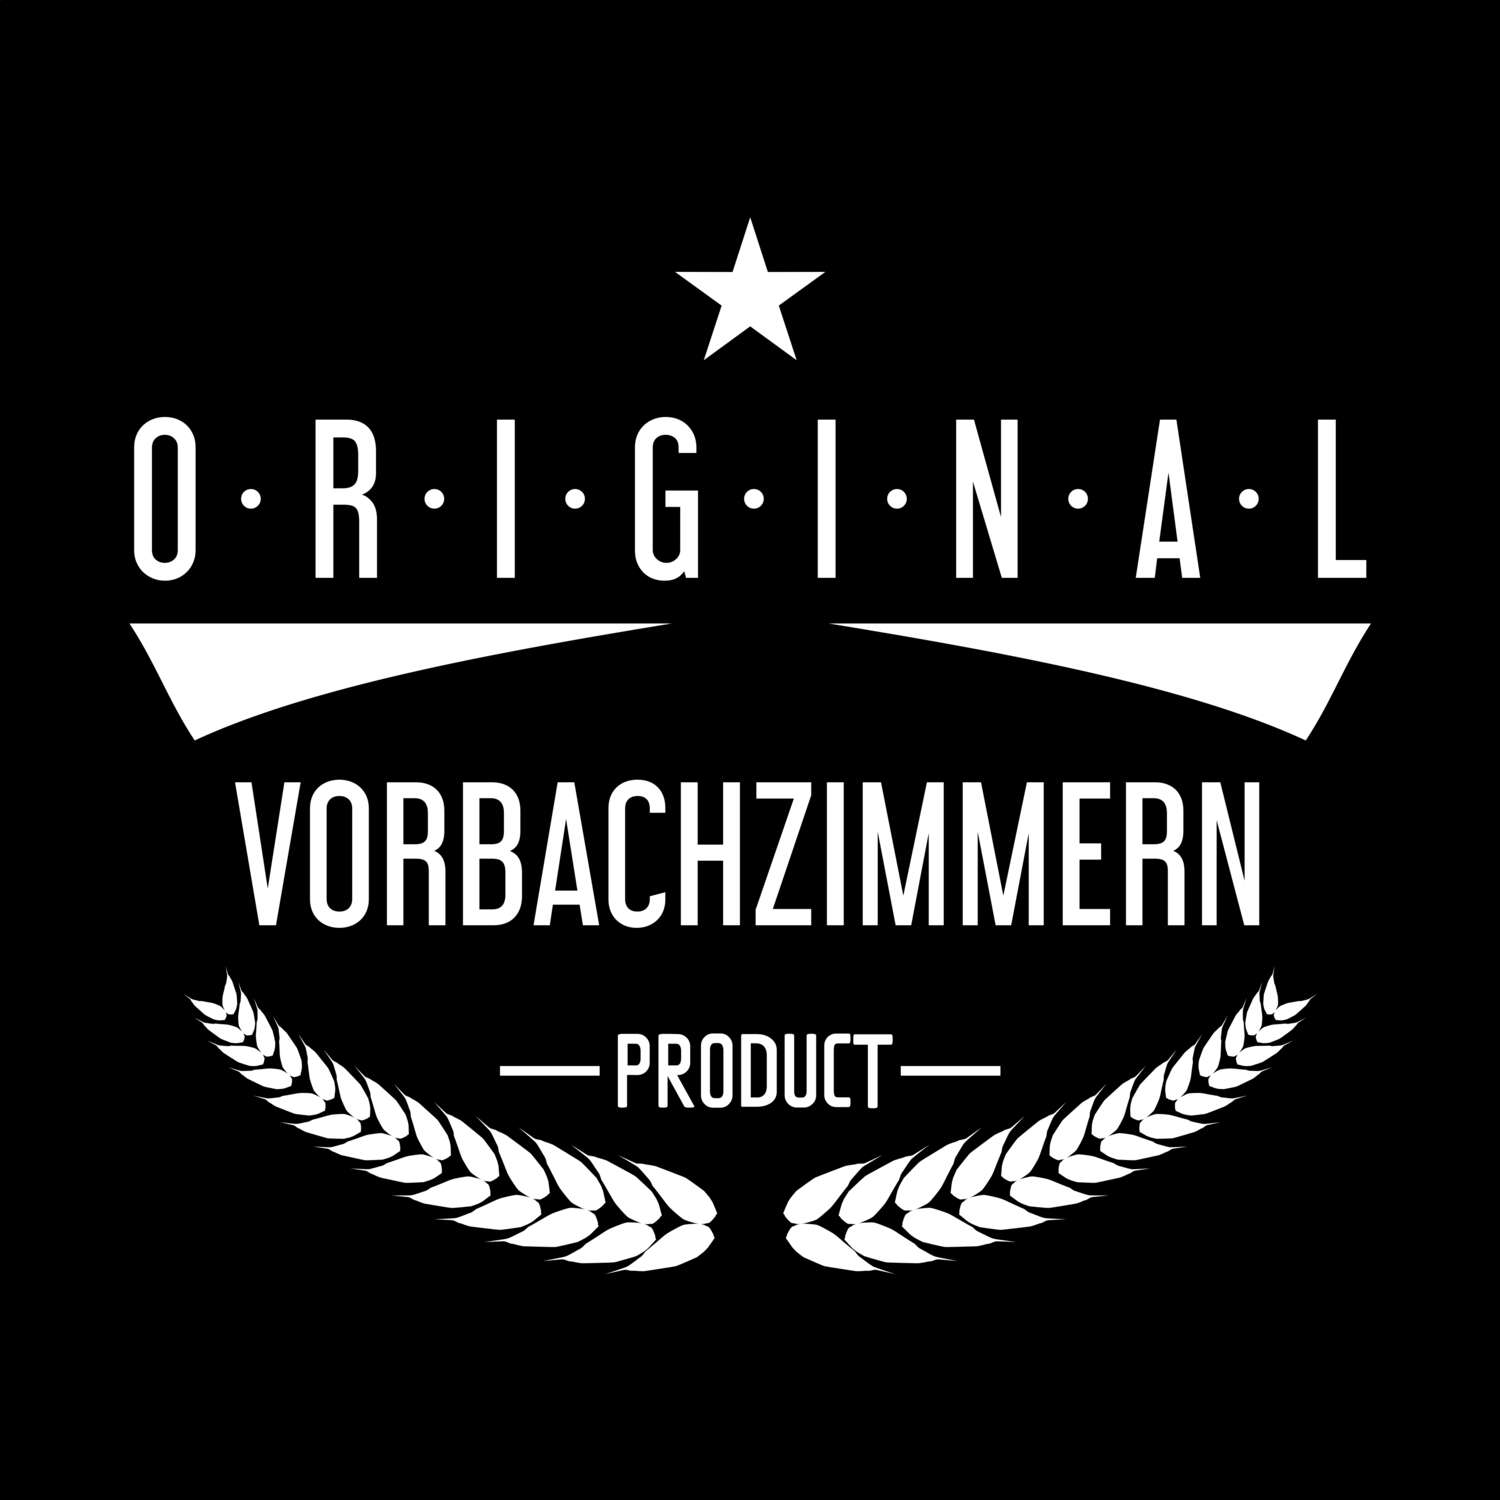 Vorbachzimmern T-Shirt »Original Product«